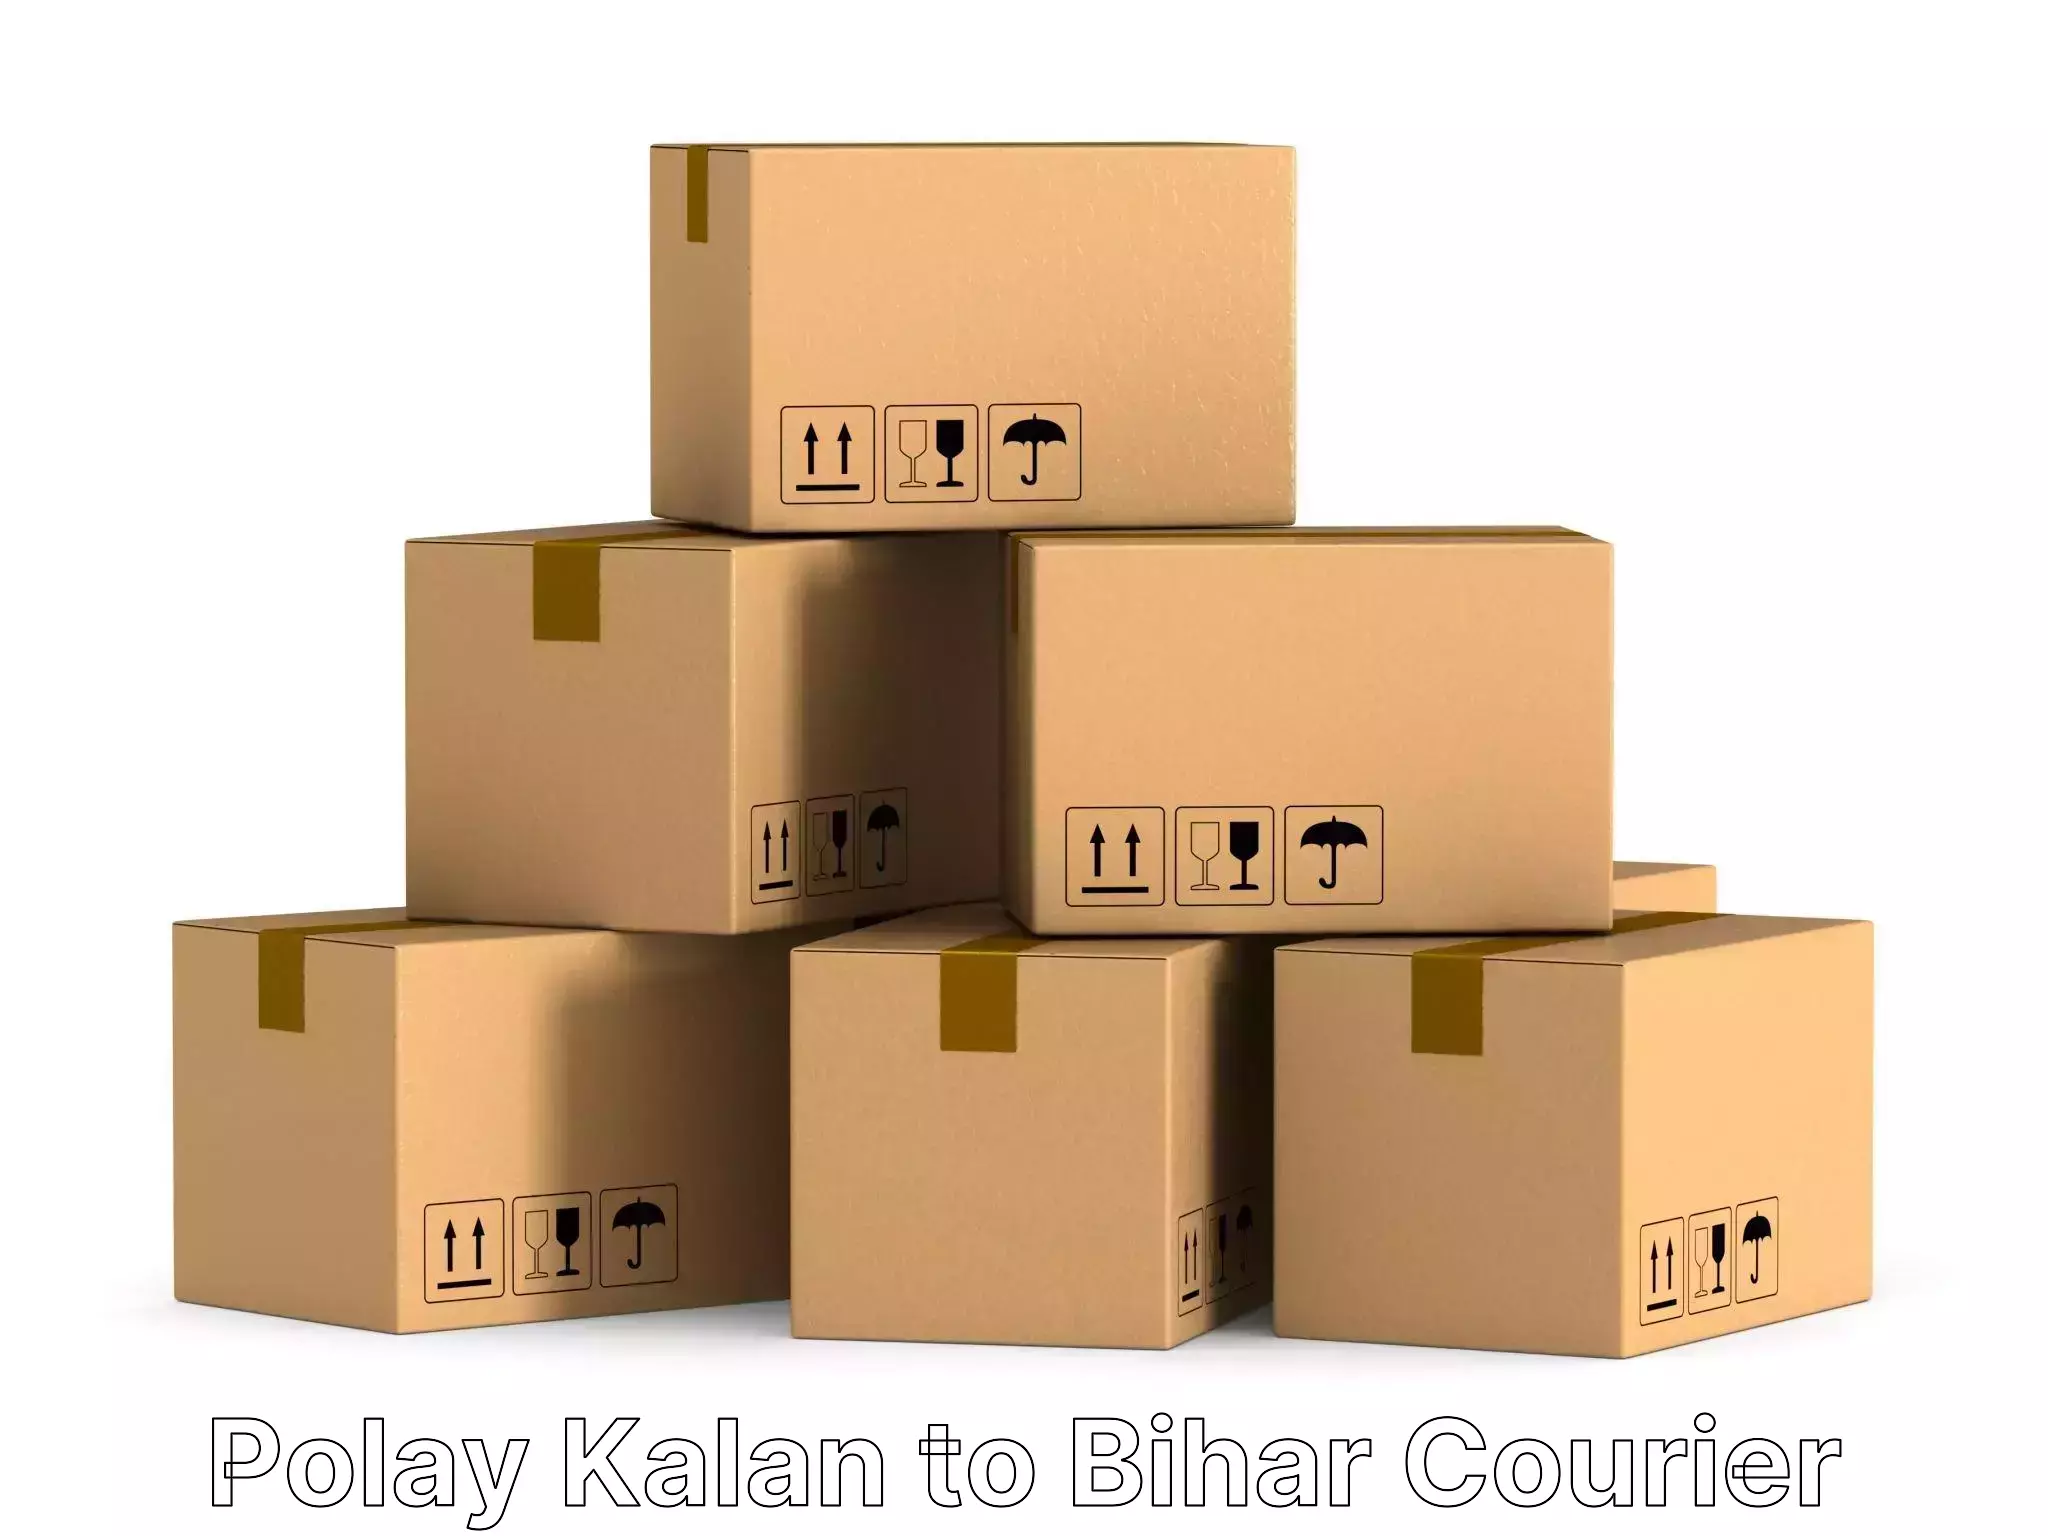 Moving and storage services Polay Kalan to Bihar